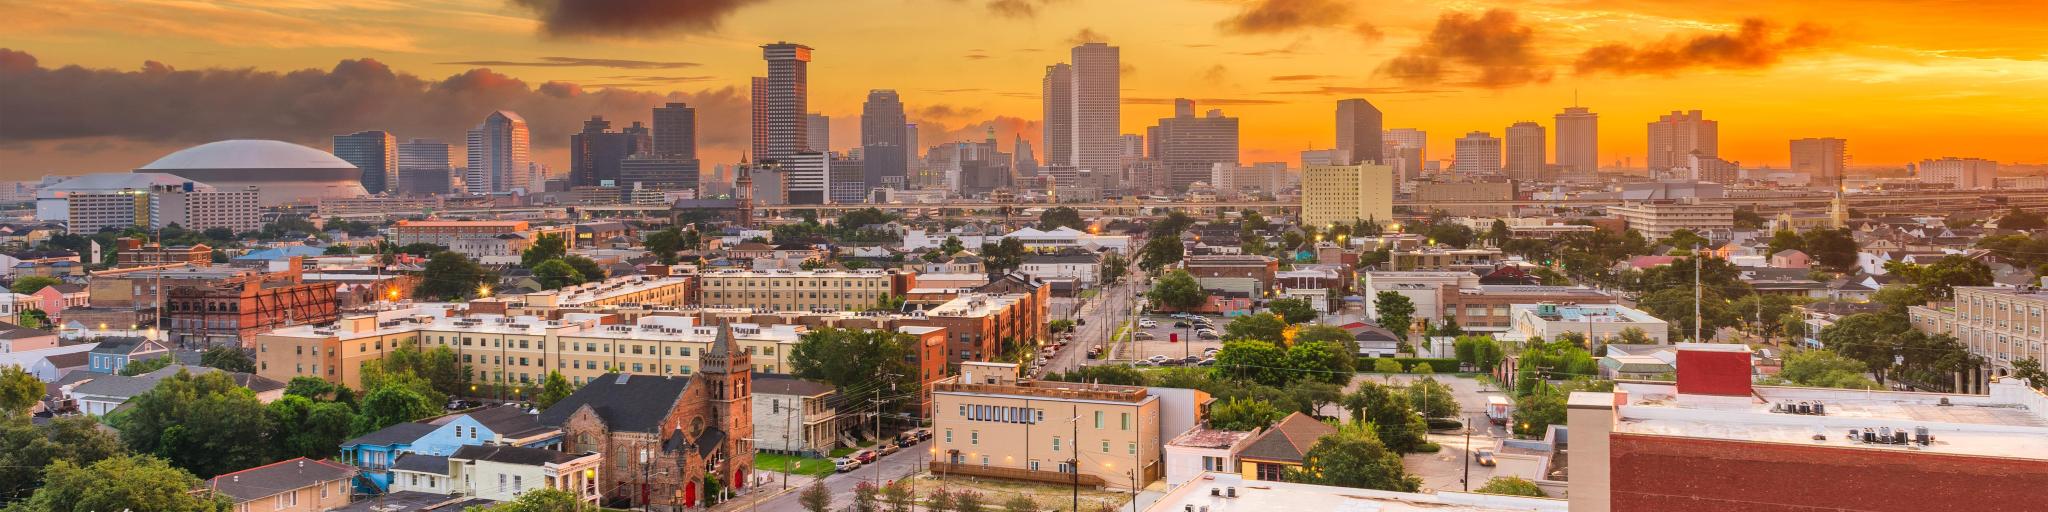 Skyline of New Orleans, Louisiana